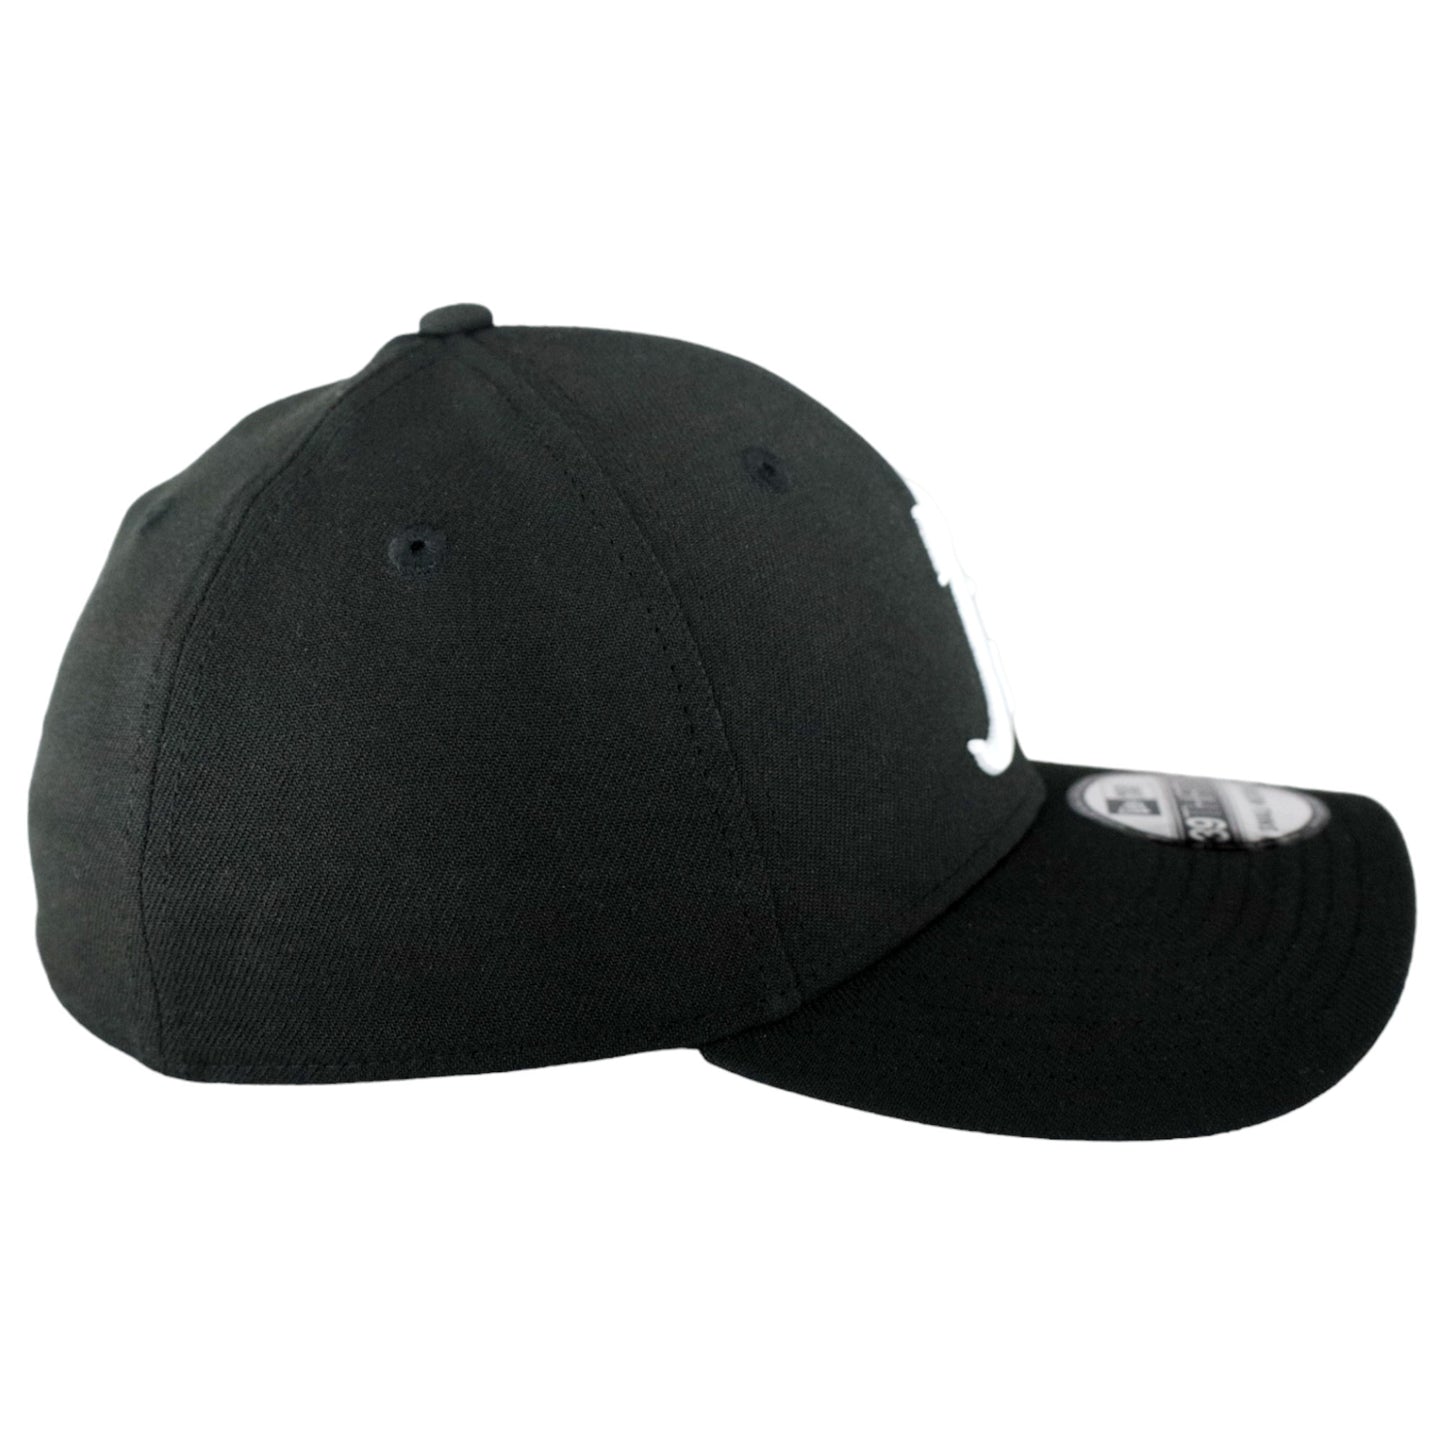 Chicago Bears New Era Black 39THIRTY Flex Fit Hat